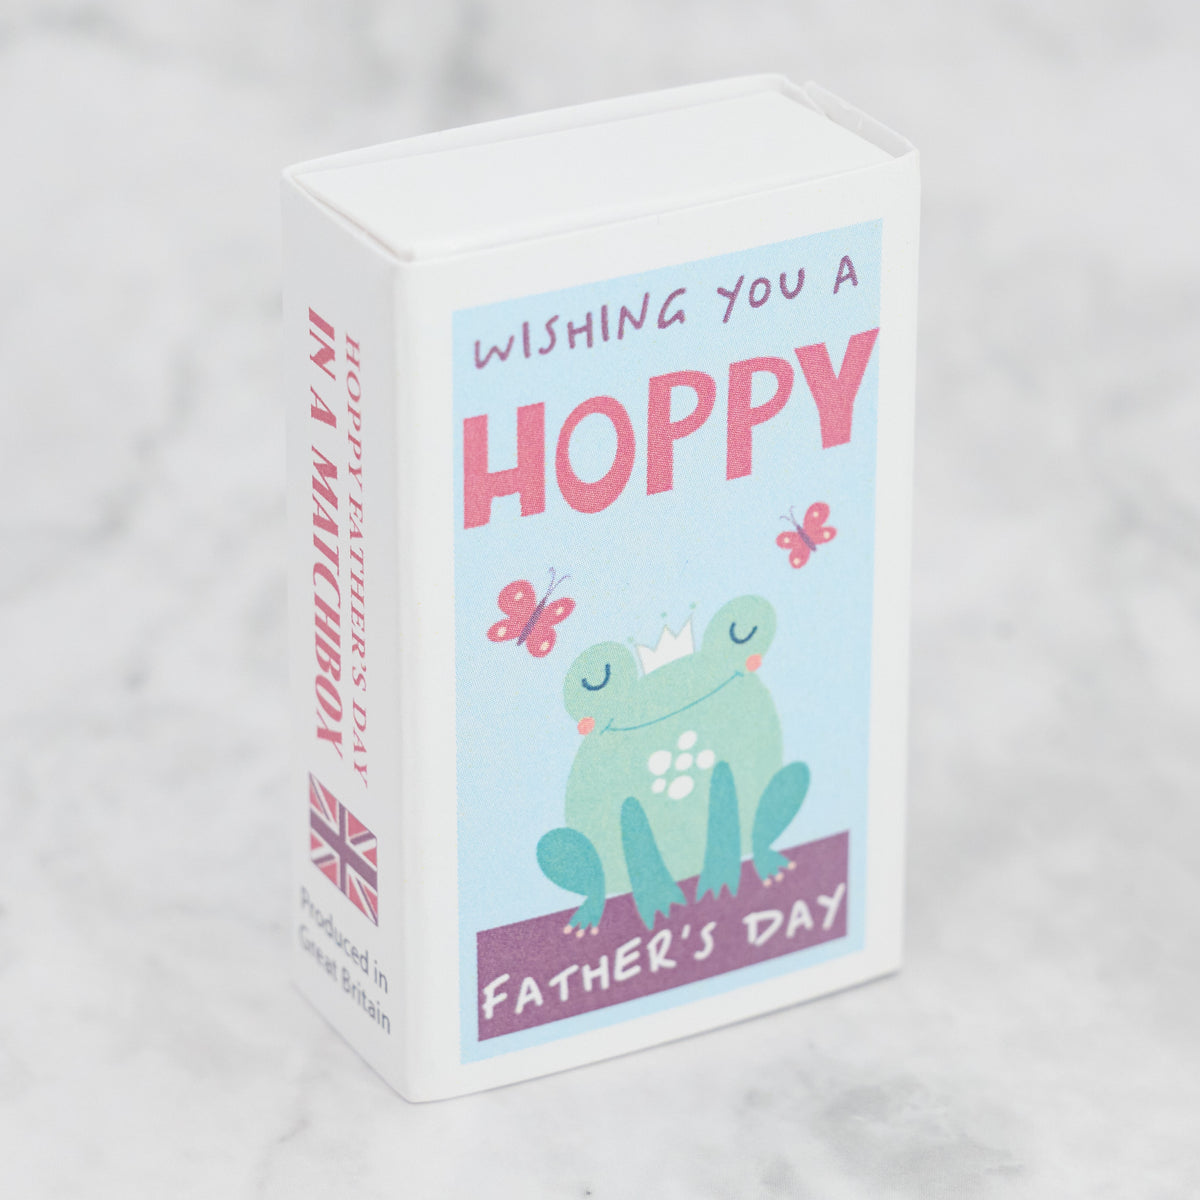 Hoppy Father's Day wool felt frog